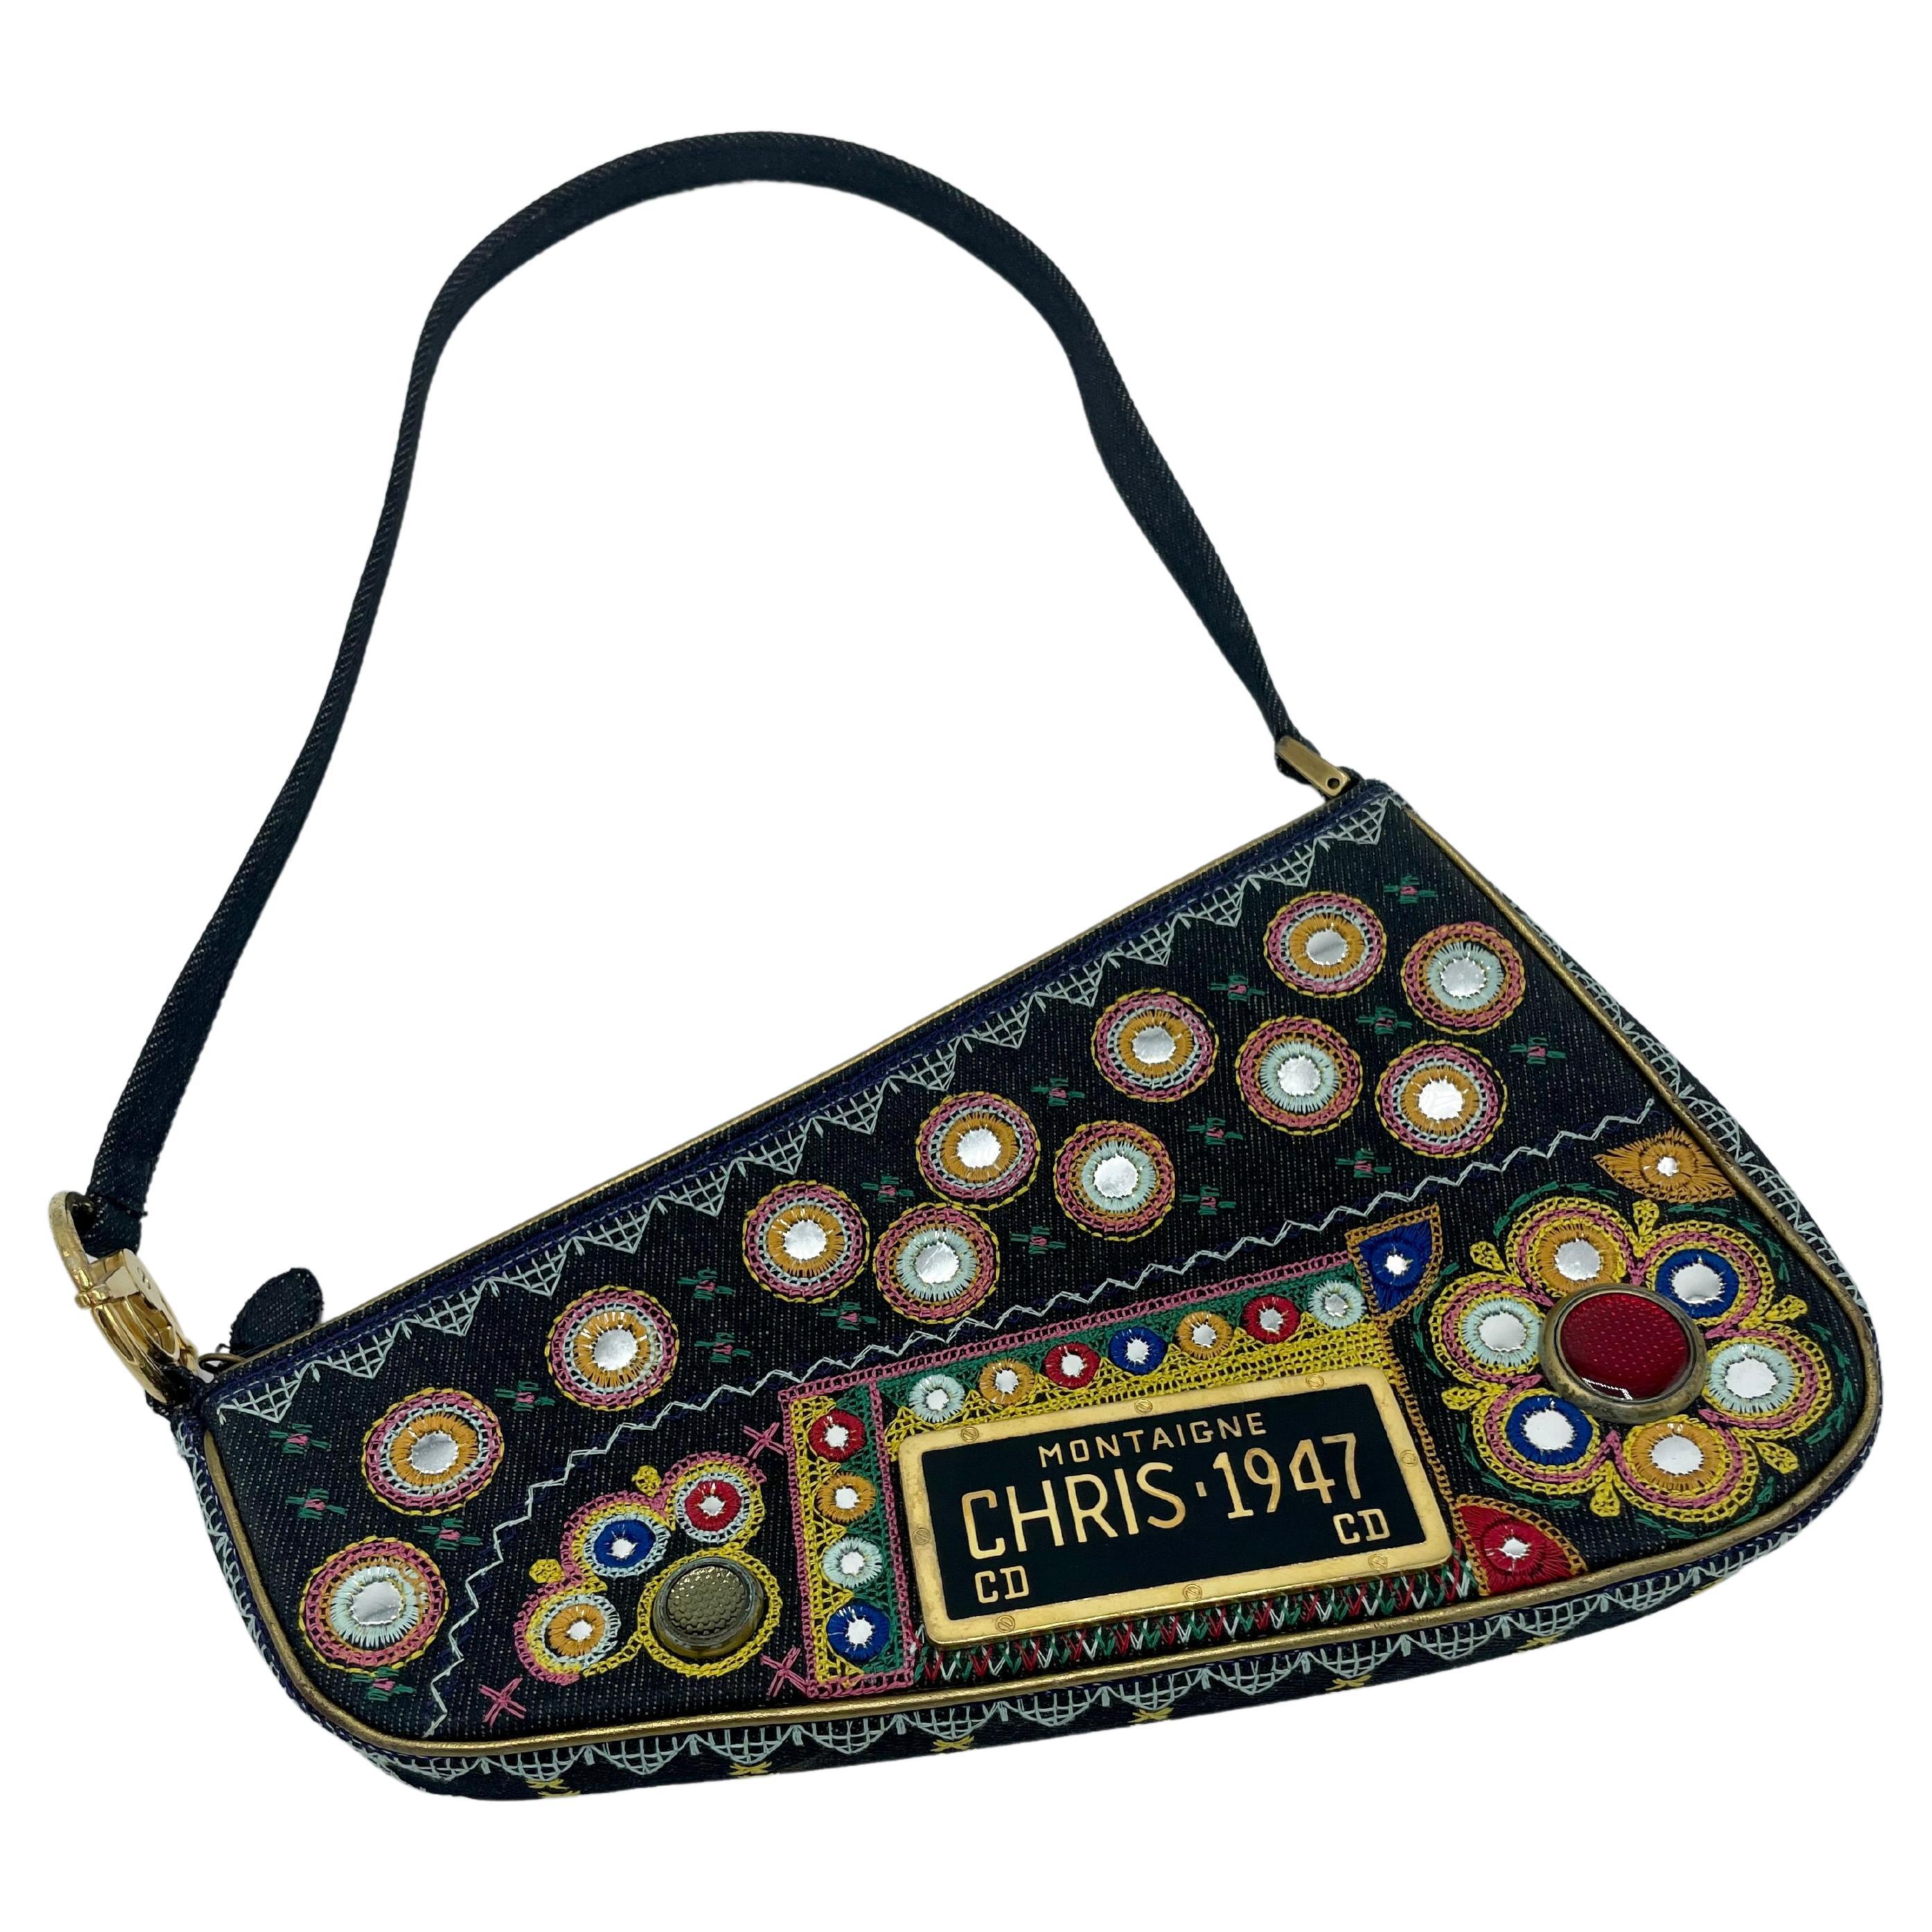 Montaigne Chris 1947 Christian Dior Saddle Bag